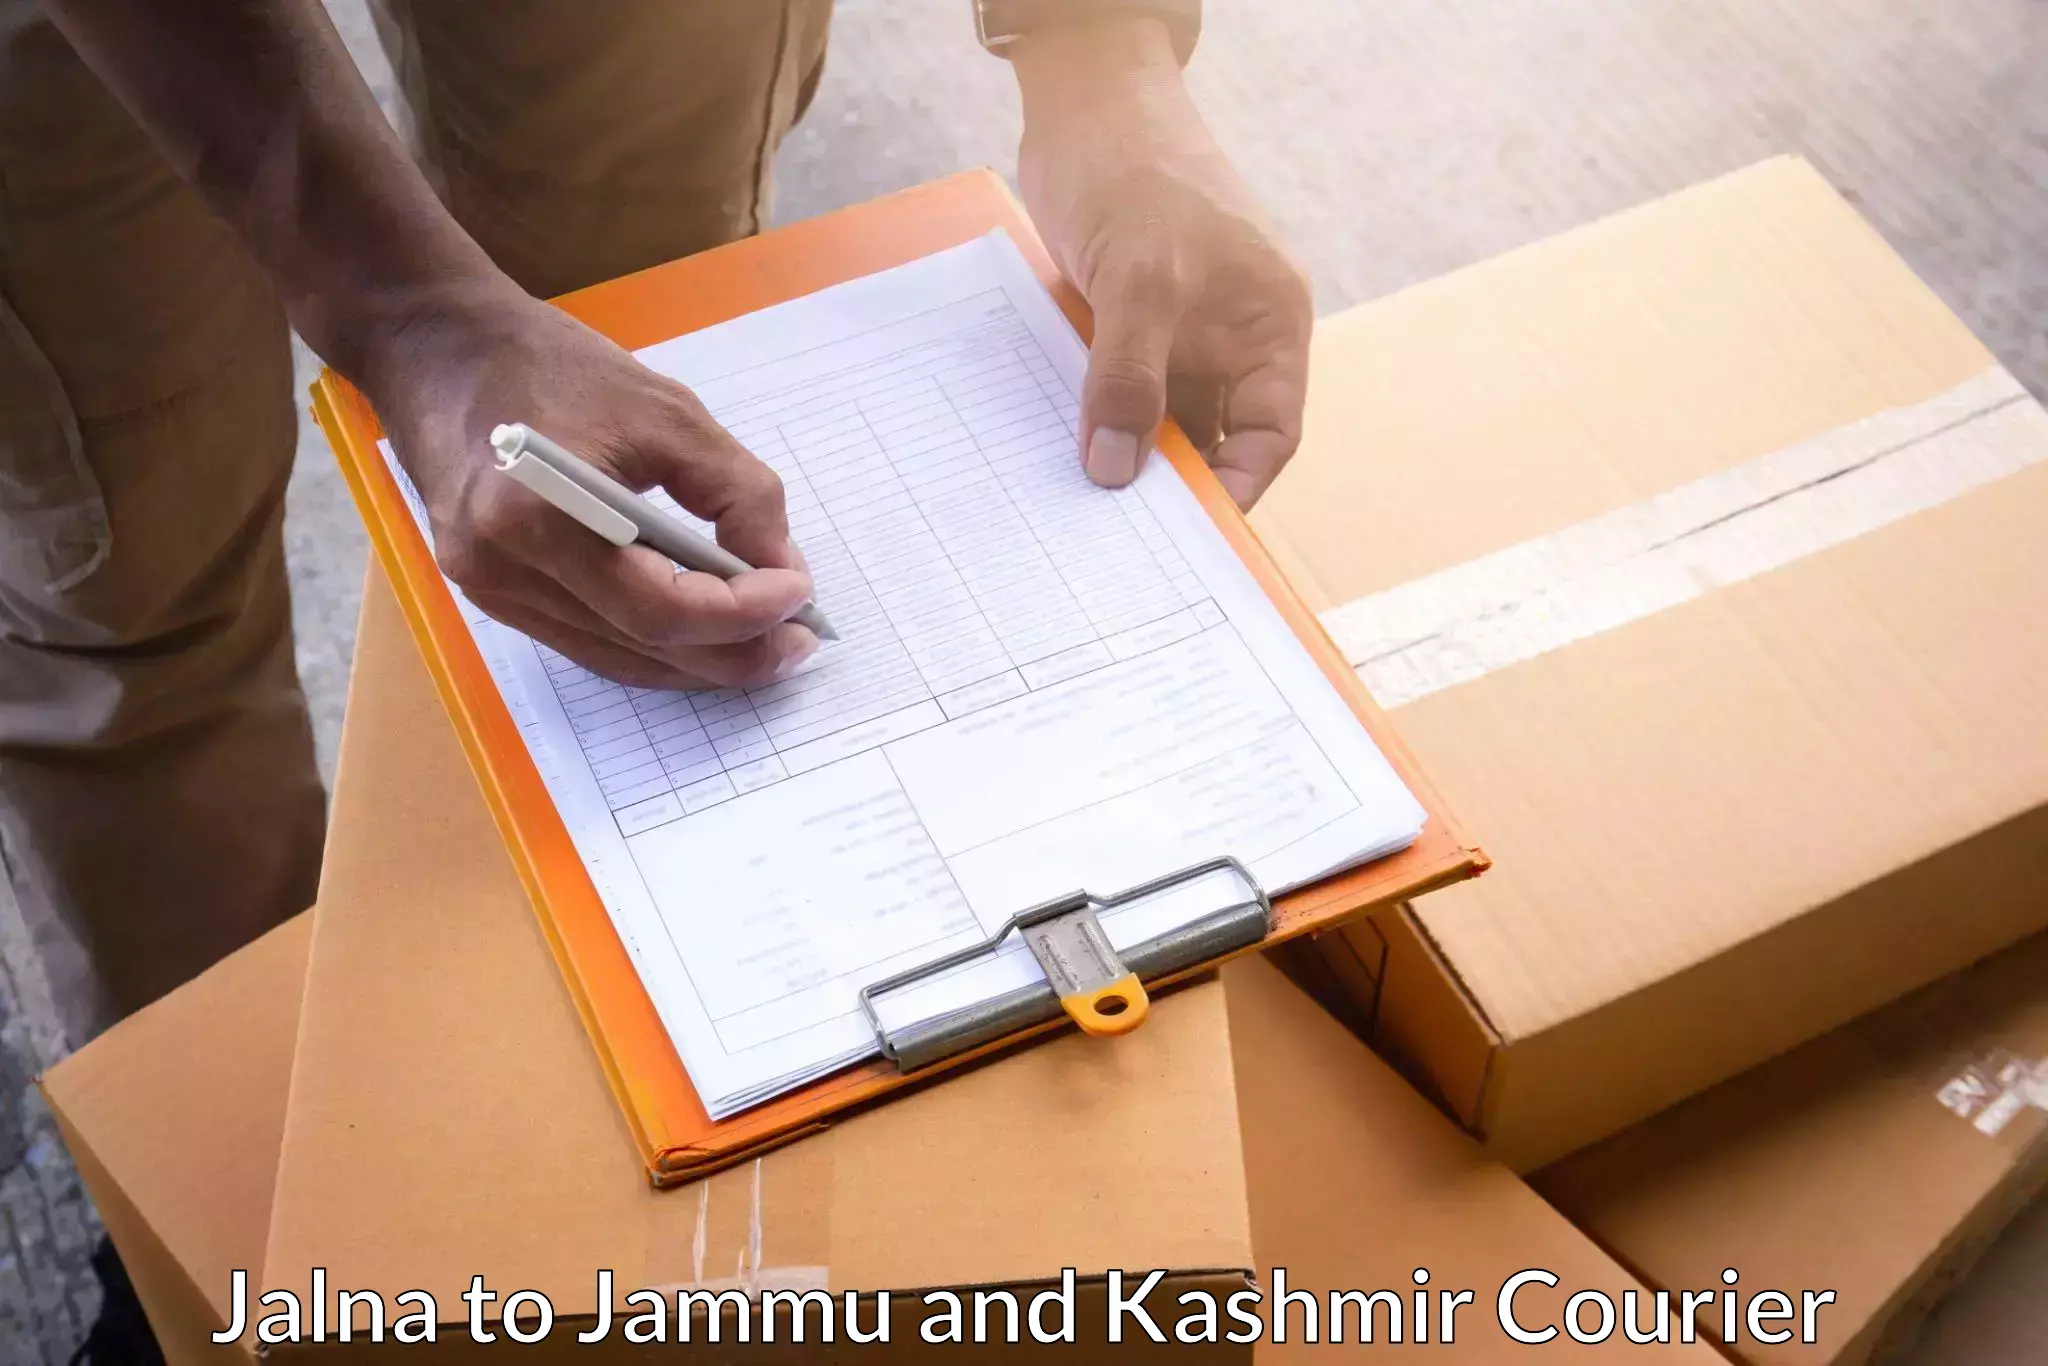 Courier service partnerships Jalna to Leh